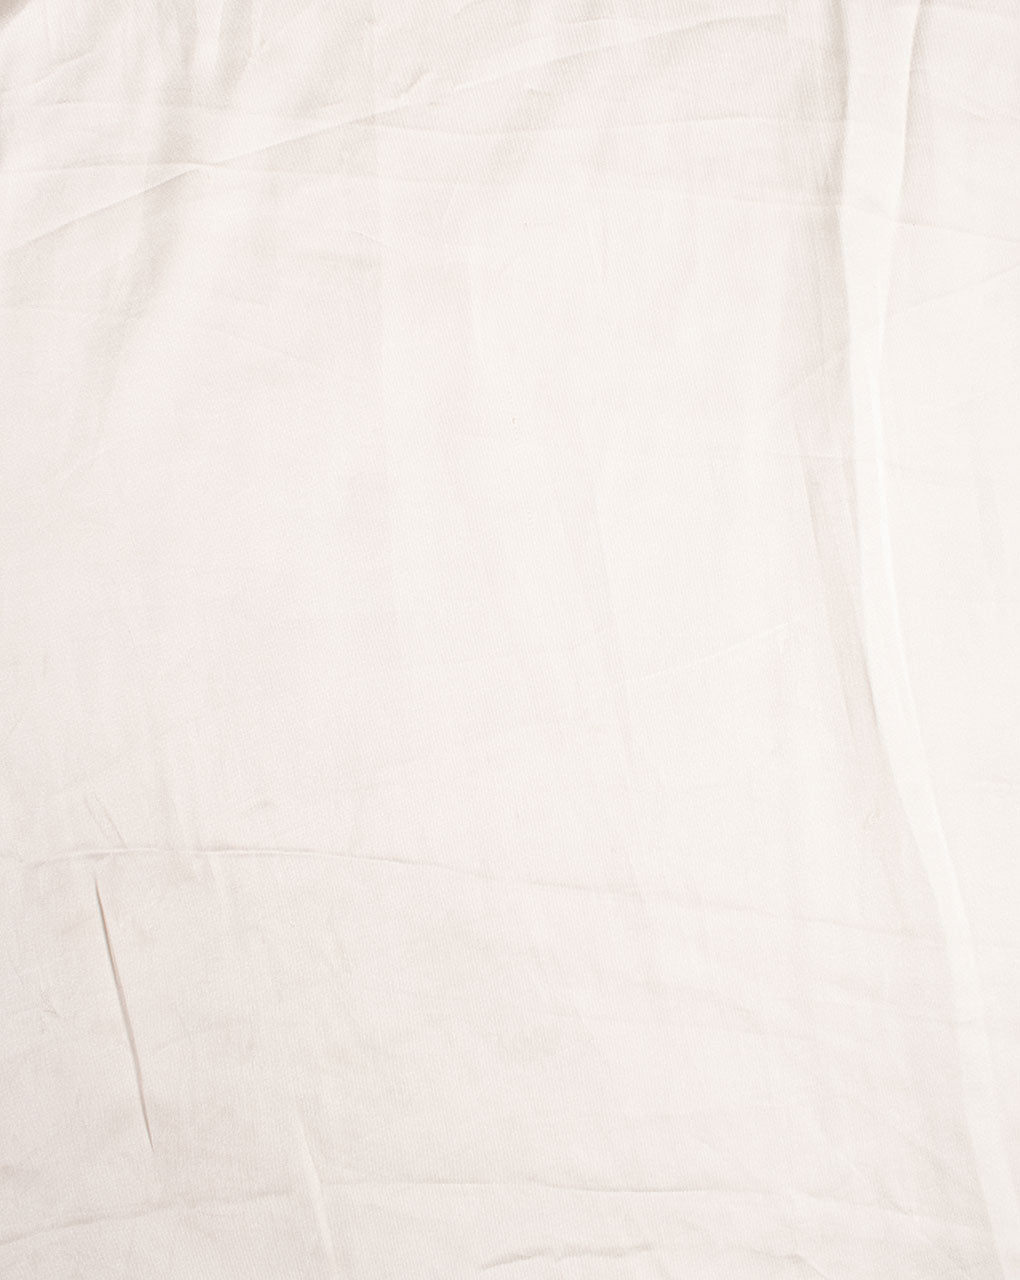 Off-White Plain Satin Fabric